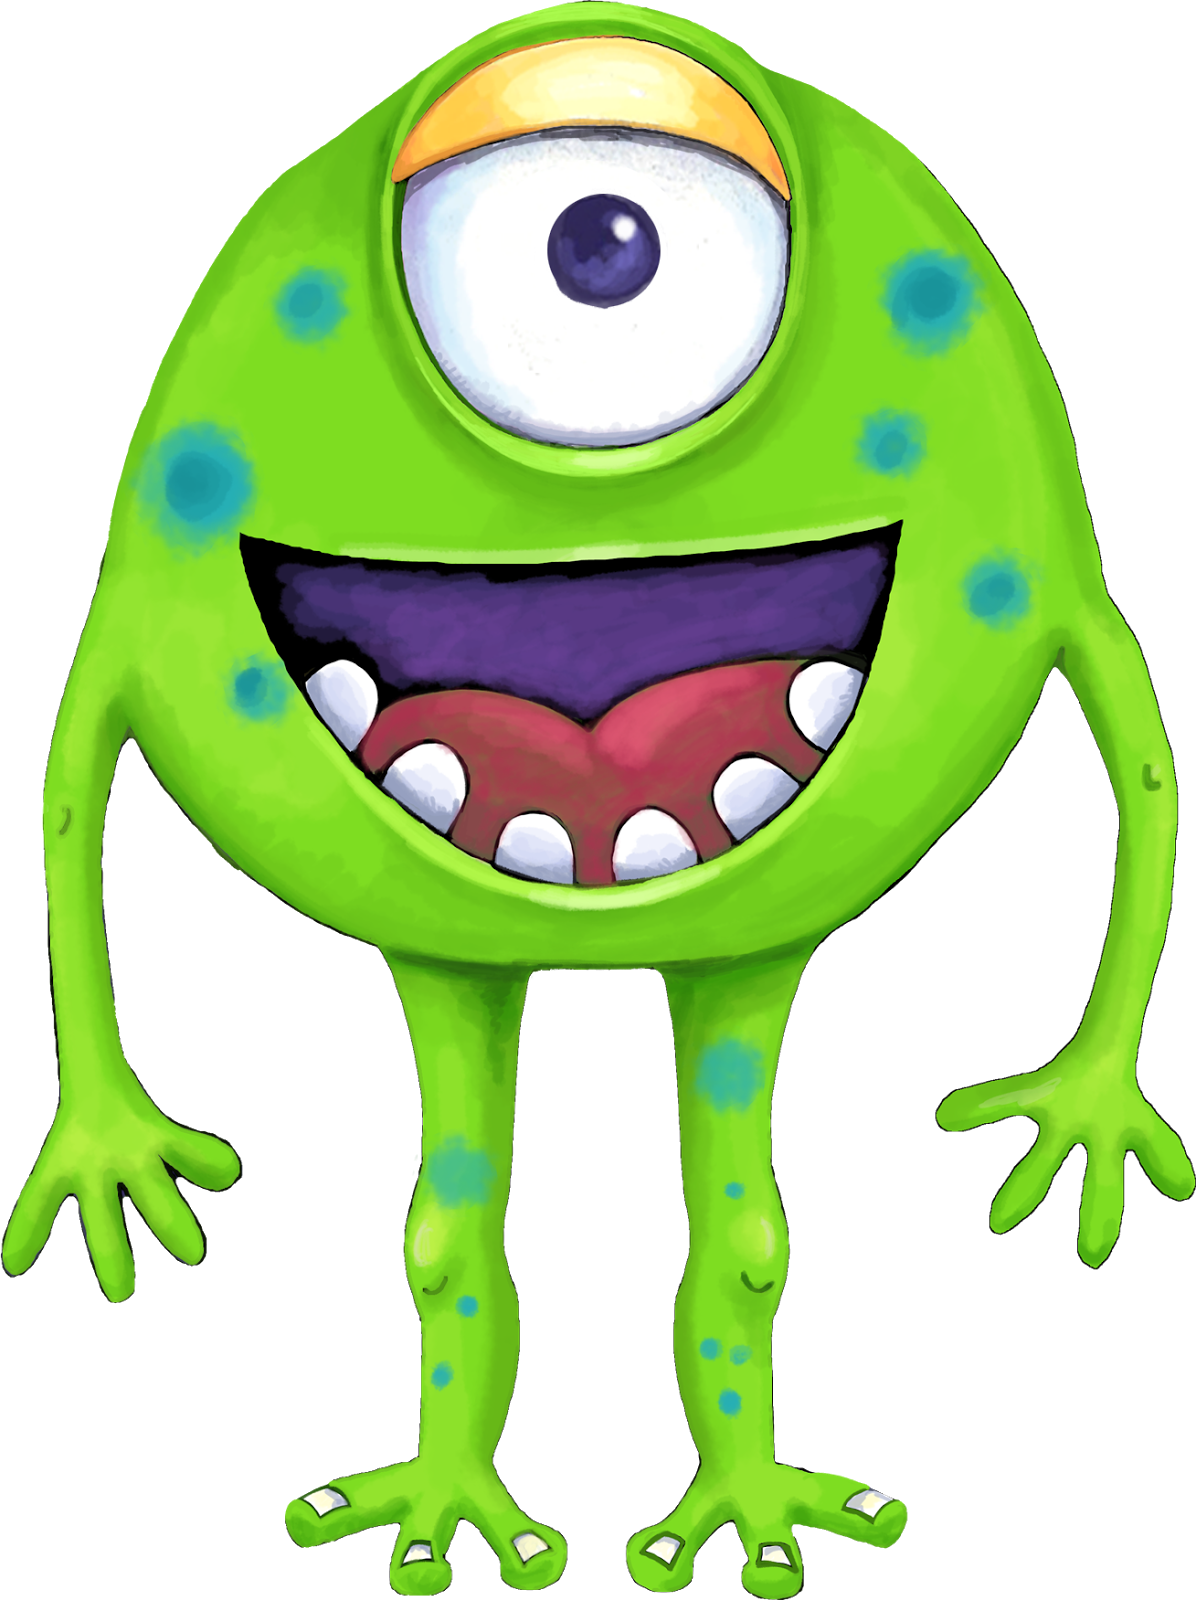 Your Free Art: Cute Blue, Purple and Green Cartoon Alien Monsters.